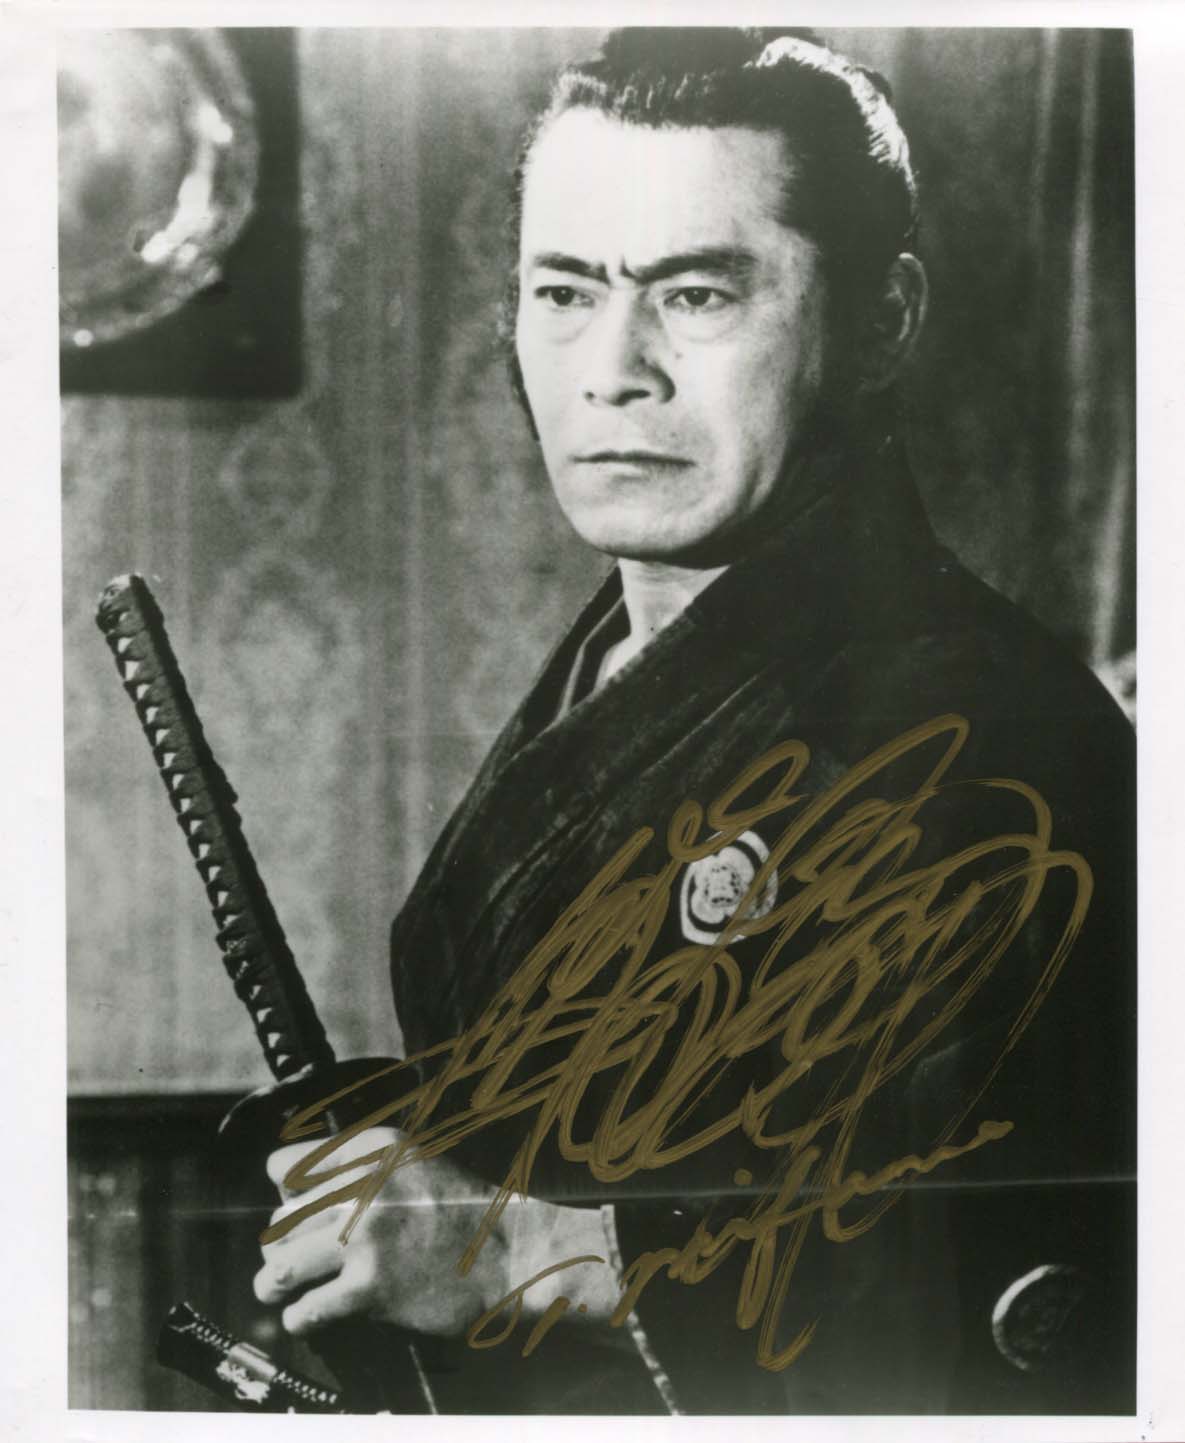 Toshiro Mifune Autograph Autogramm | ID 8144235692181